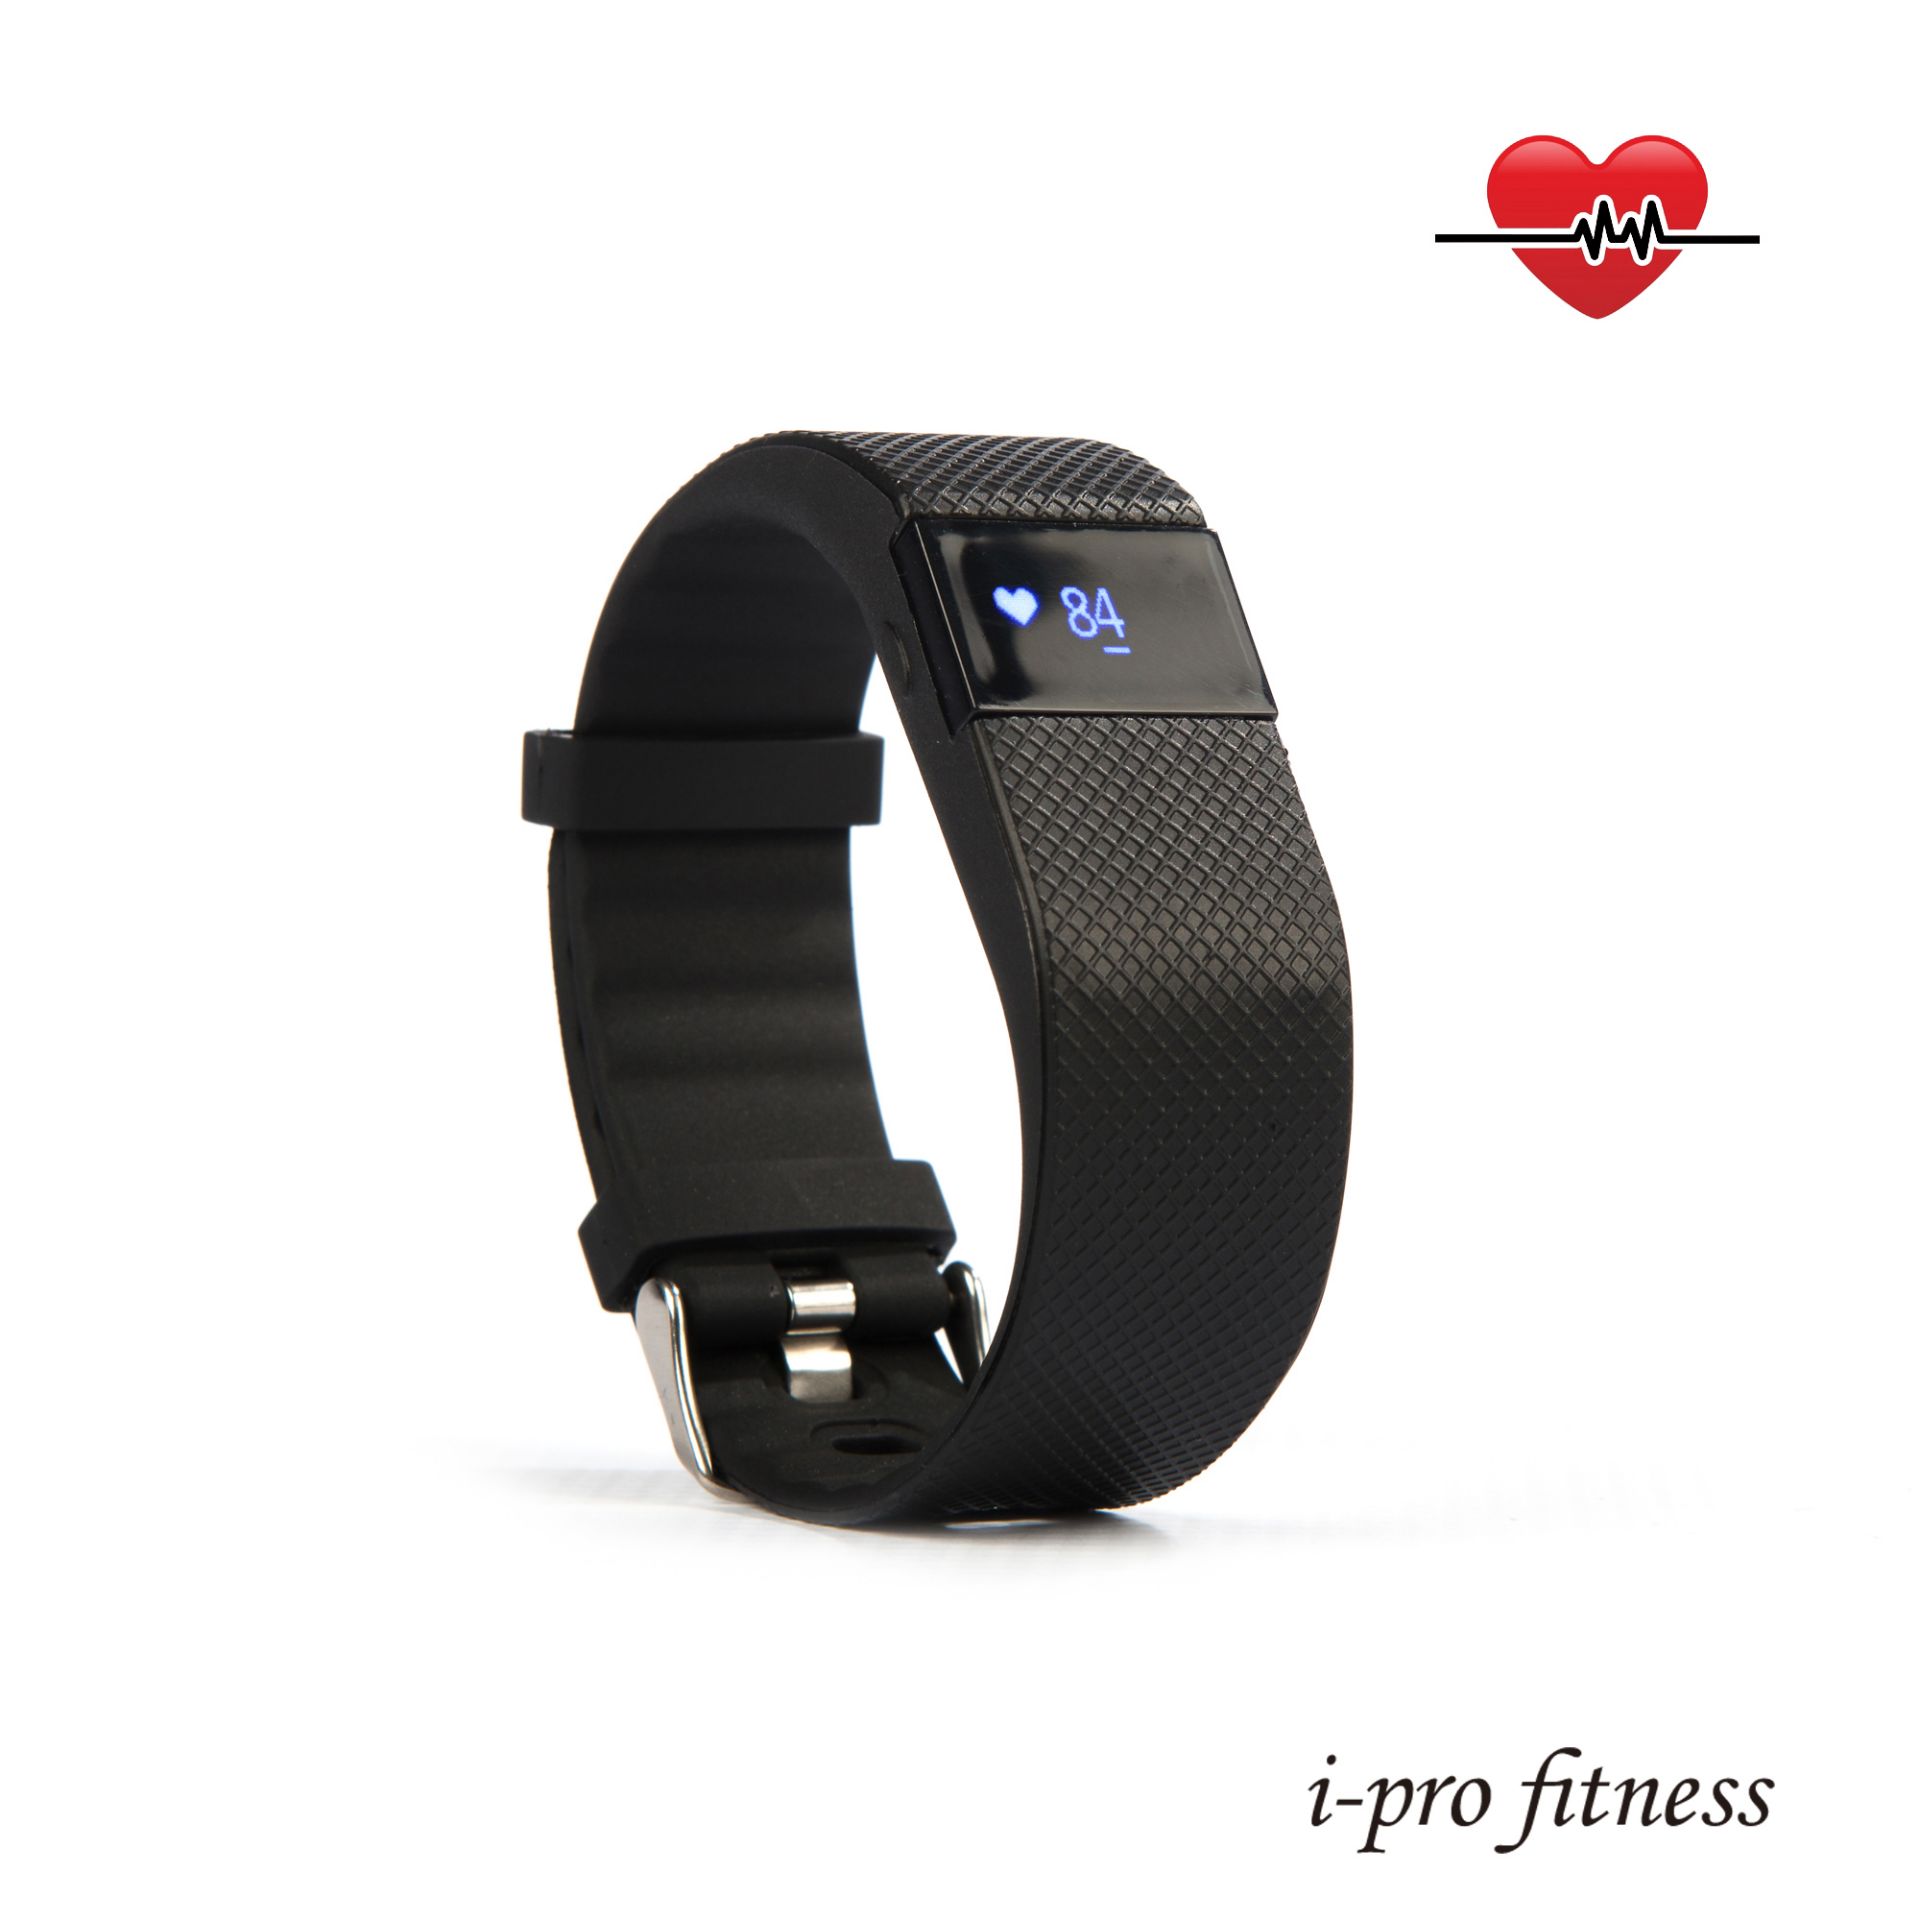 10x Fitness Tracker i-pro fitness, Bluetooth 4.0 Sports Smart Bracelet, Heart Rate Monitor - Image 4 of 8